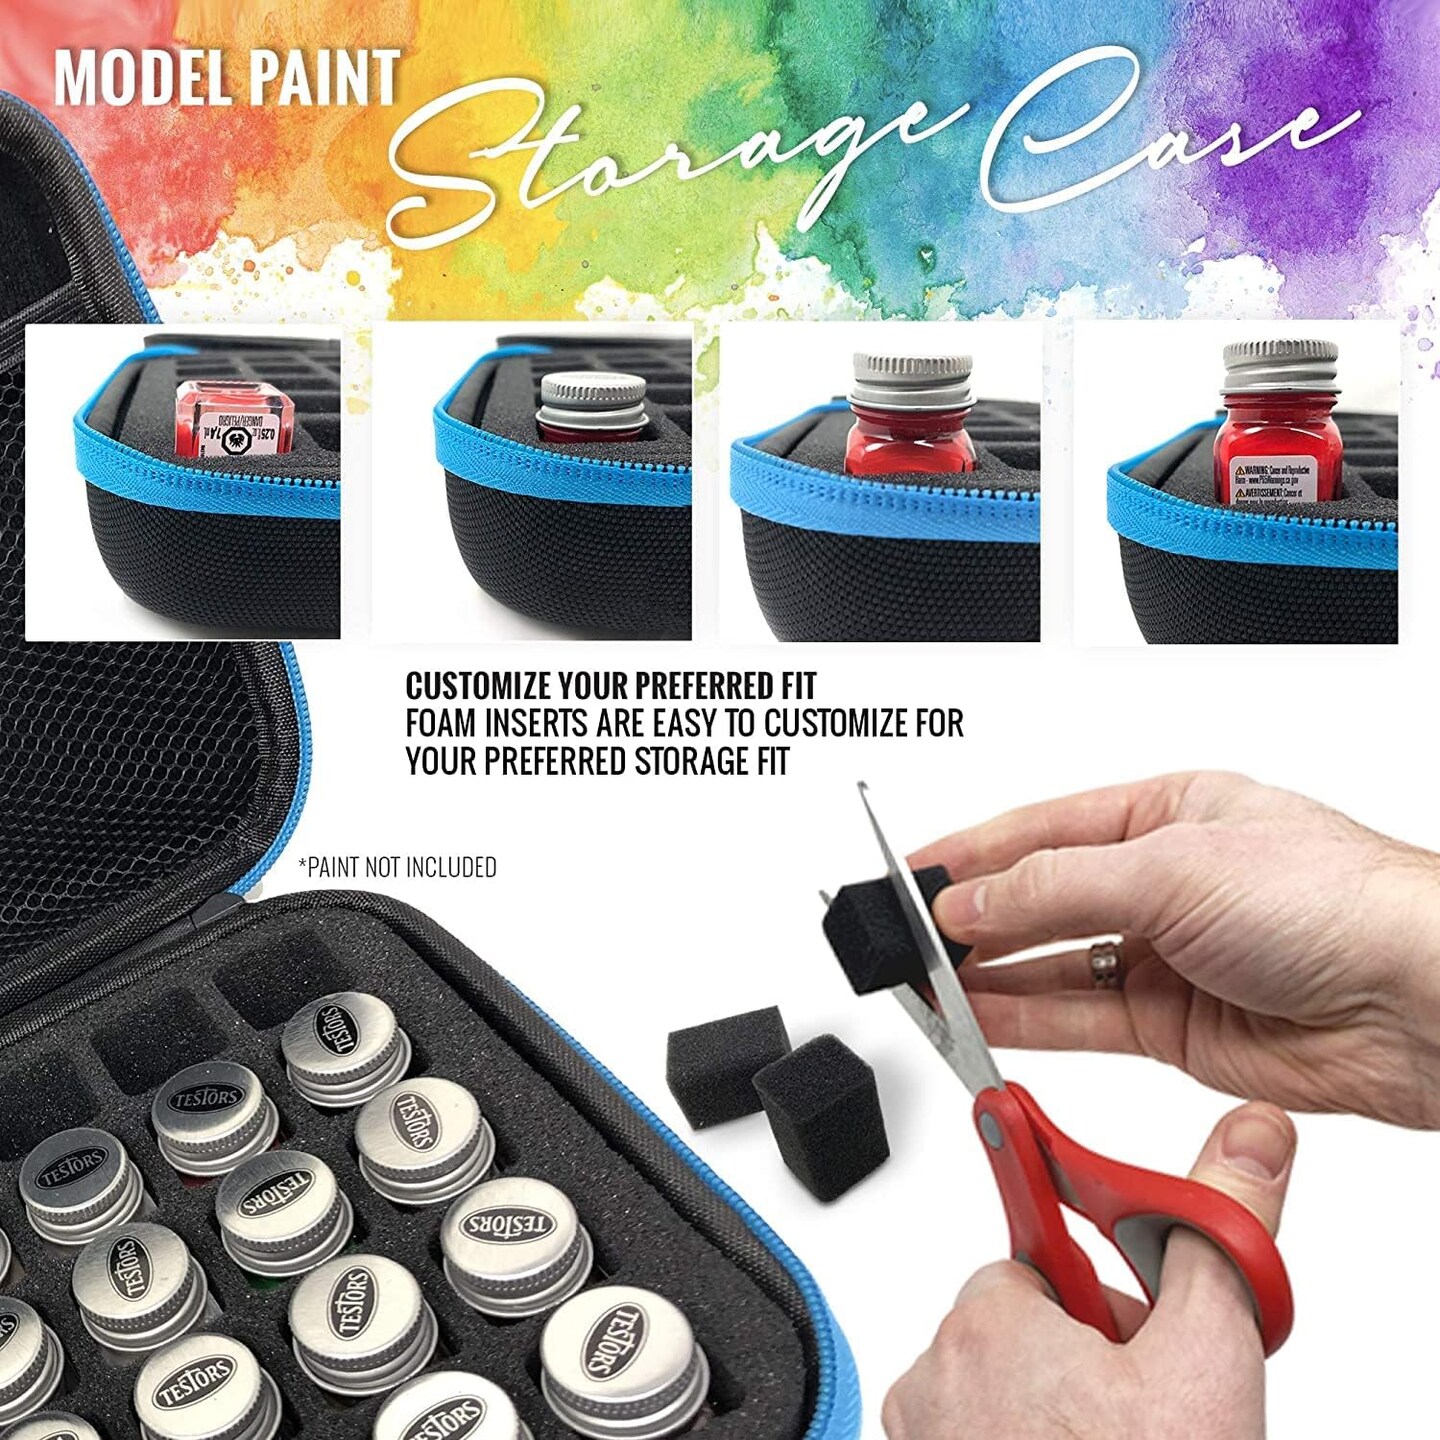 Testors 9146XT Promotional Enamel Paint Set( Packaging may vary)